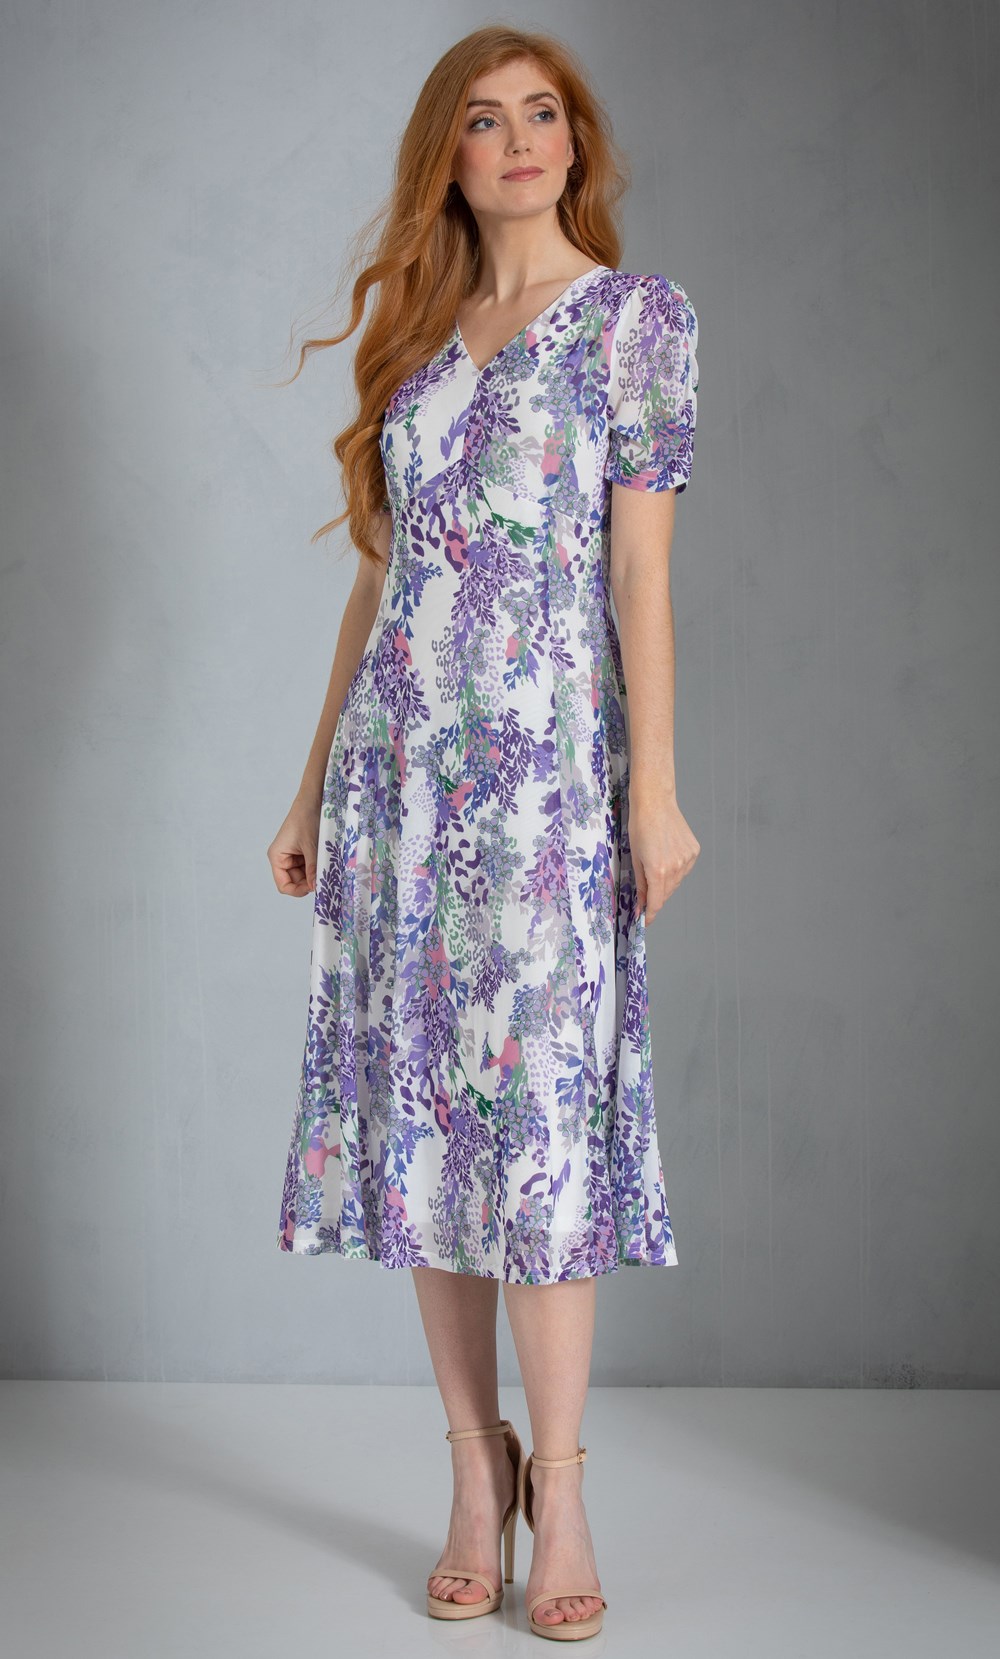 Brands - Klass Floral Printed Mesh Midi Dress Ivory/Lavender/Multi Women’s